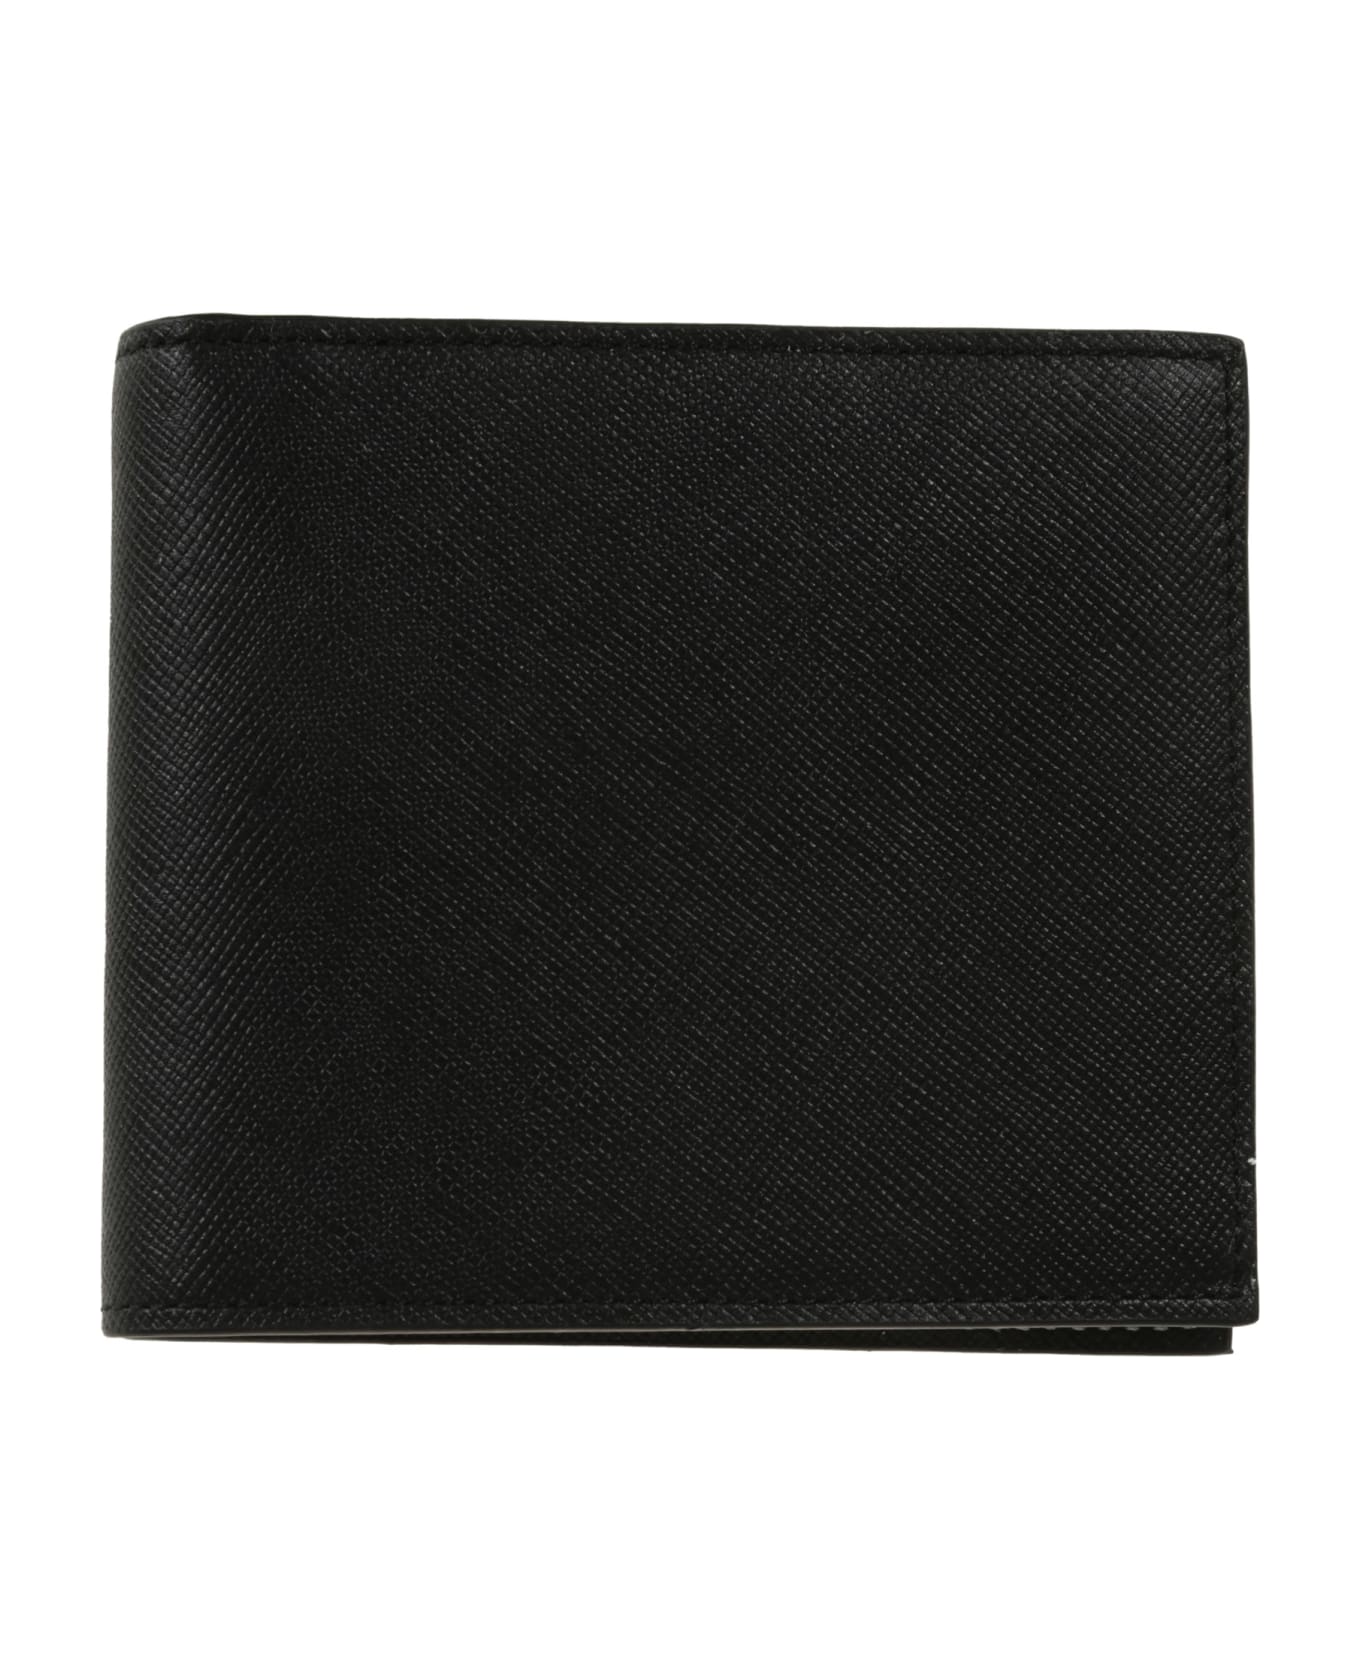 Paul Smith Wallet Bfold Mini - Black 財布